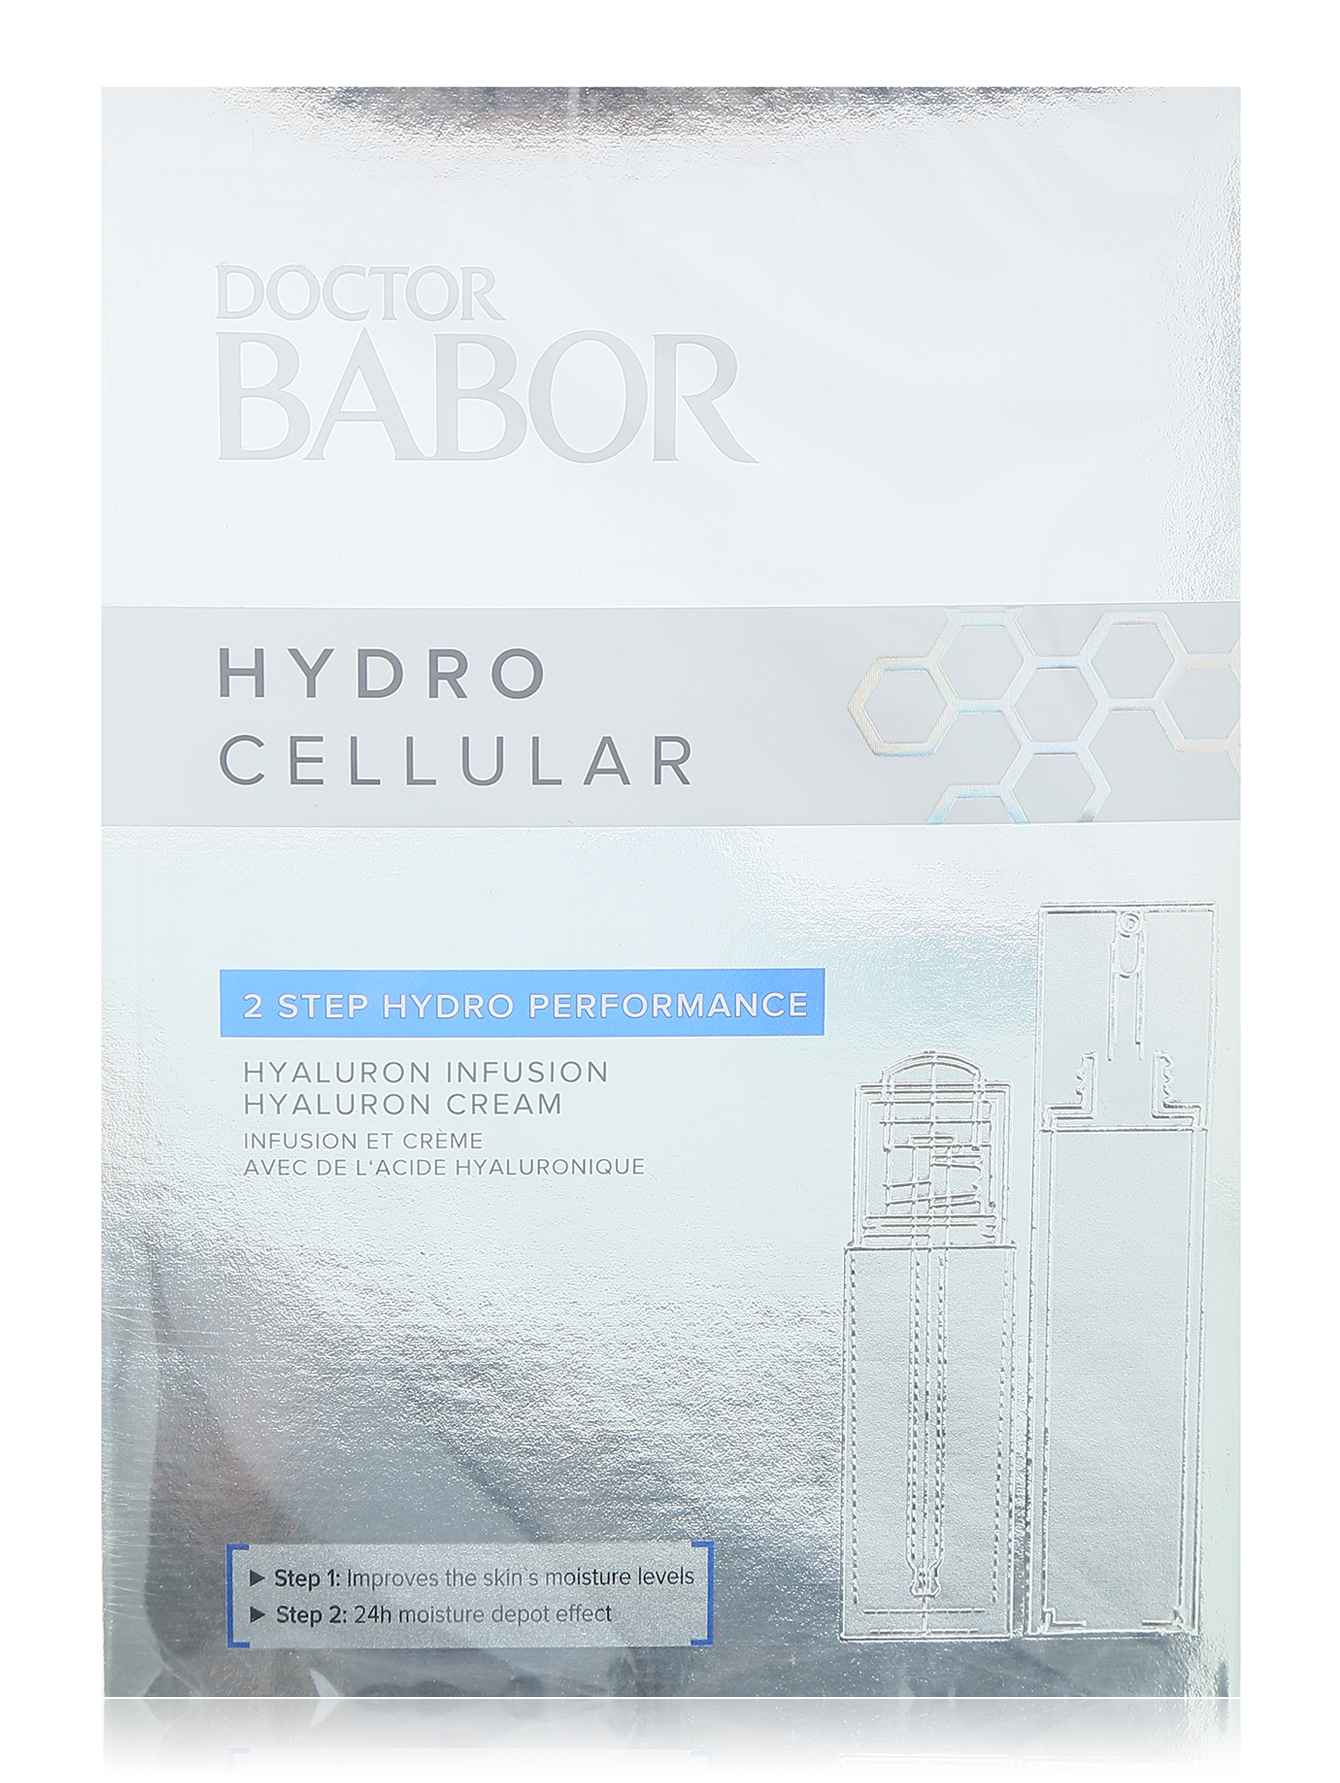 Набор-дуэт Hydrо Cellular Face Care - Общий вид